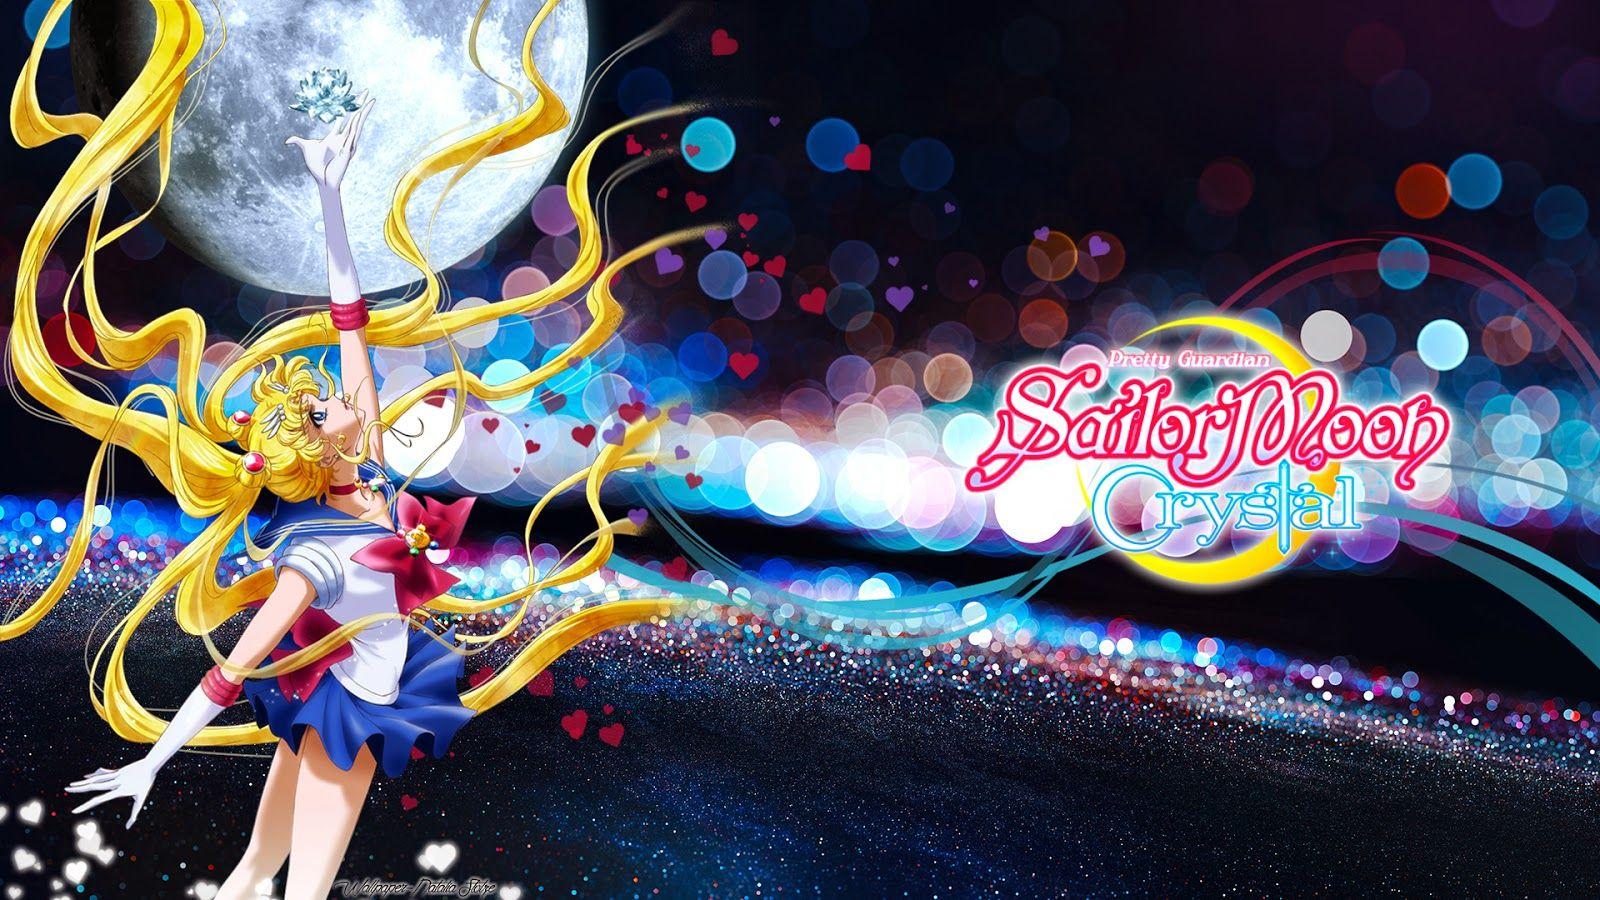 Sailor Moon Wallpapers - Top Free Sailor Moon Backgrounds ...